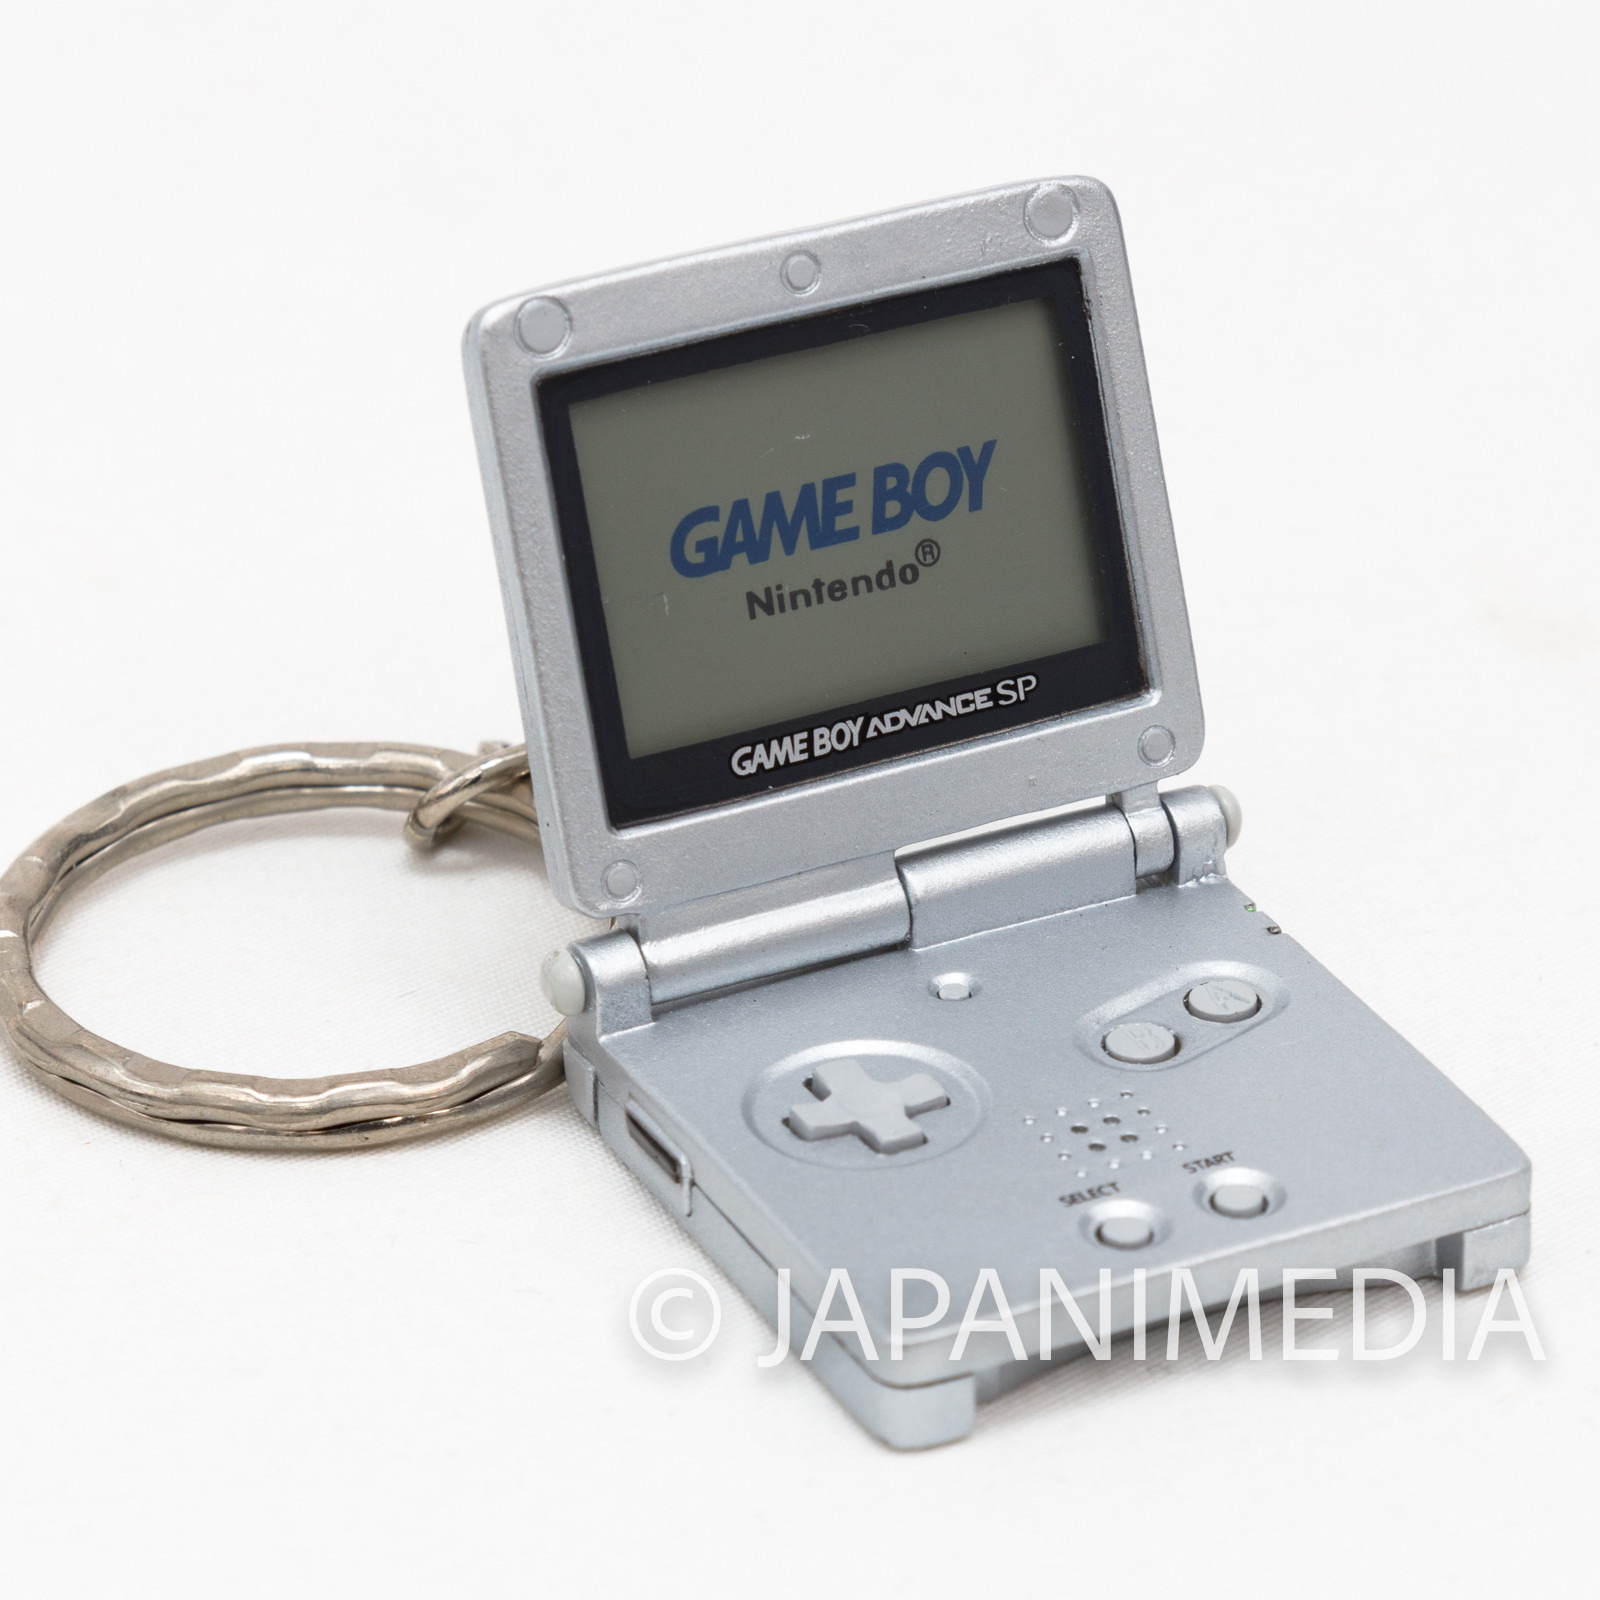 Nintendo Handy Game History Miniature Figure Key Chain GAME BOY